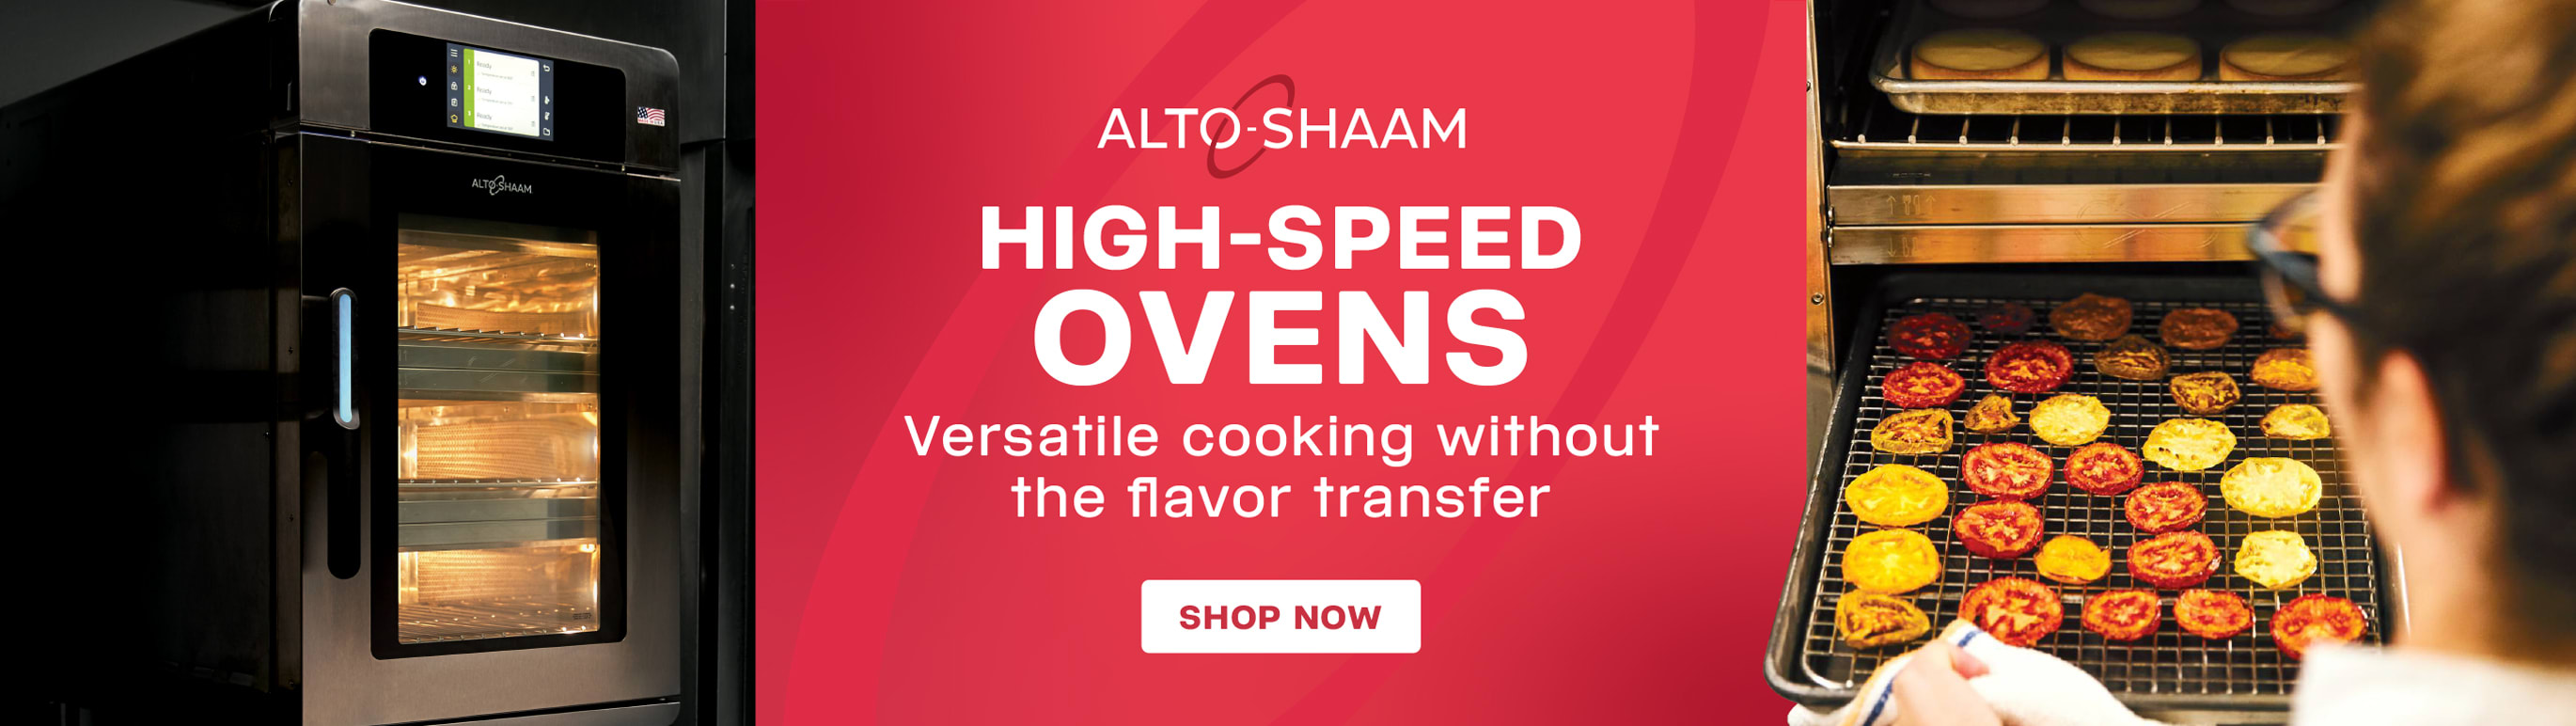 Alto-Shaam High-speed Ovens